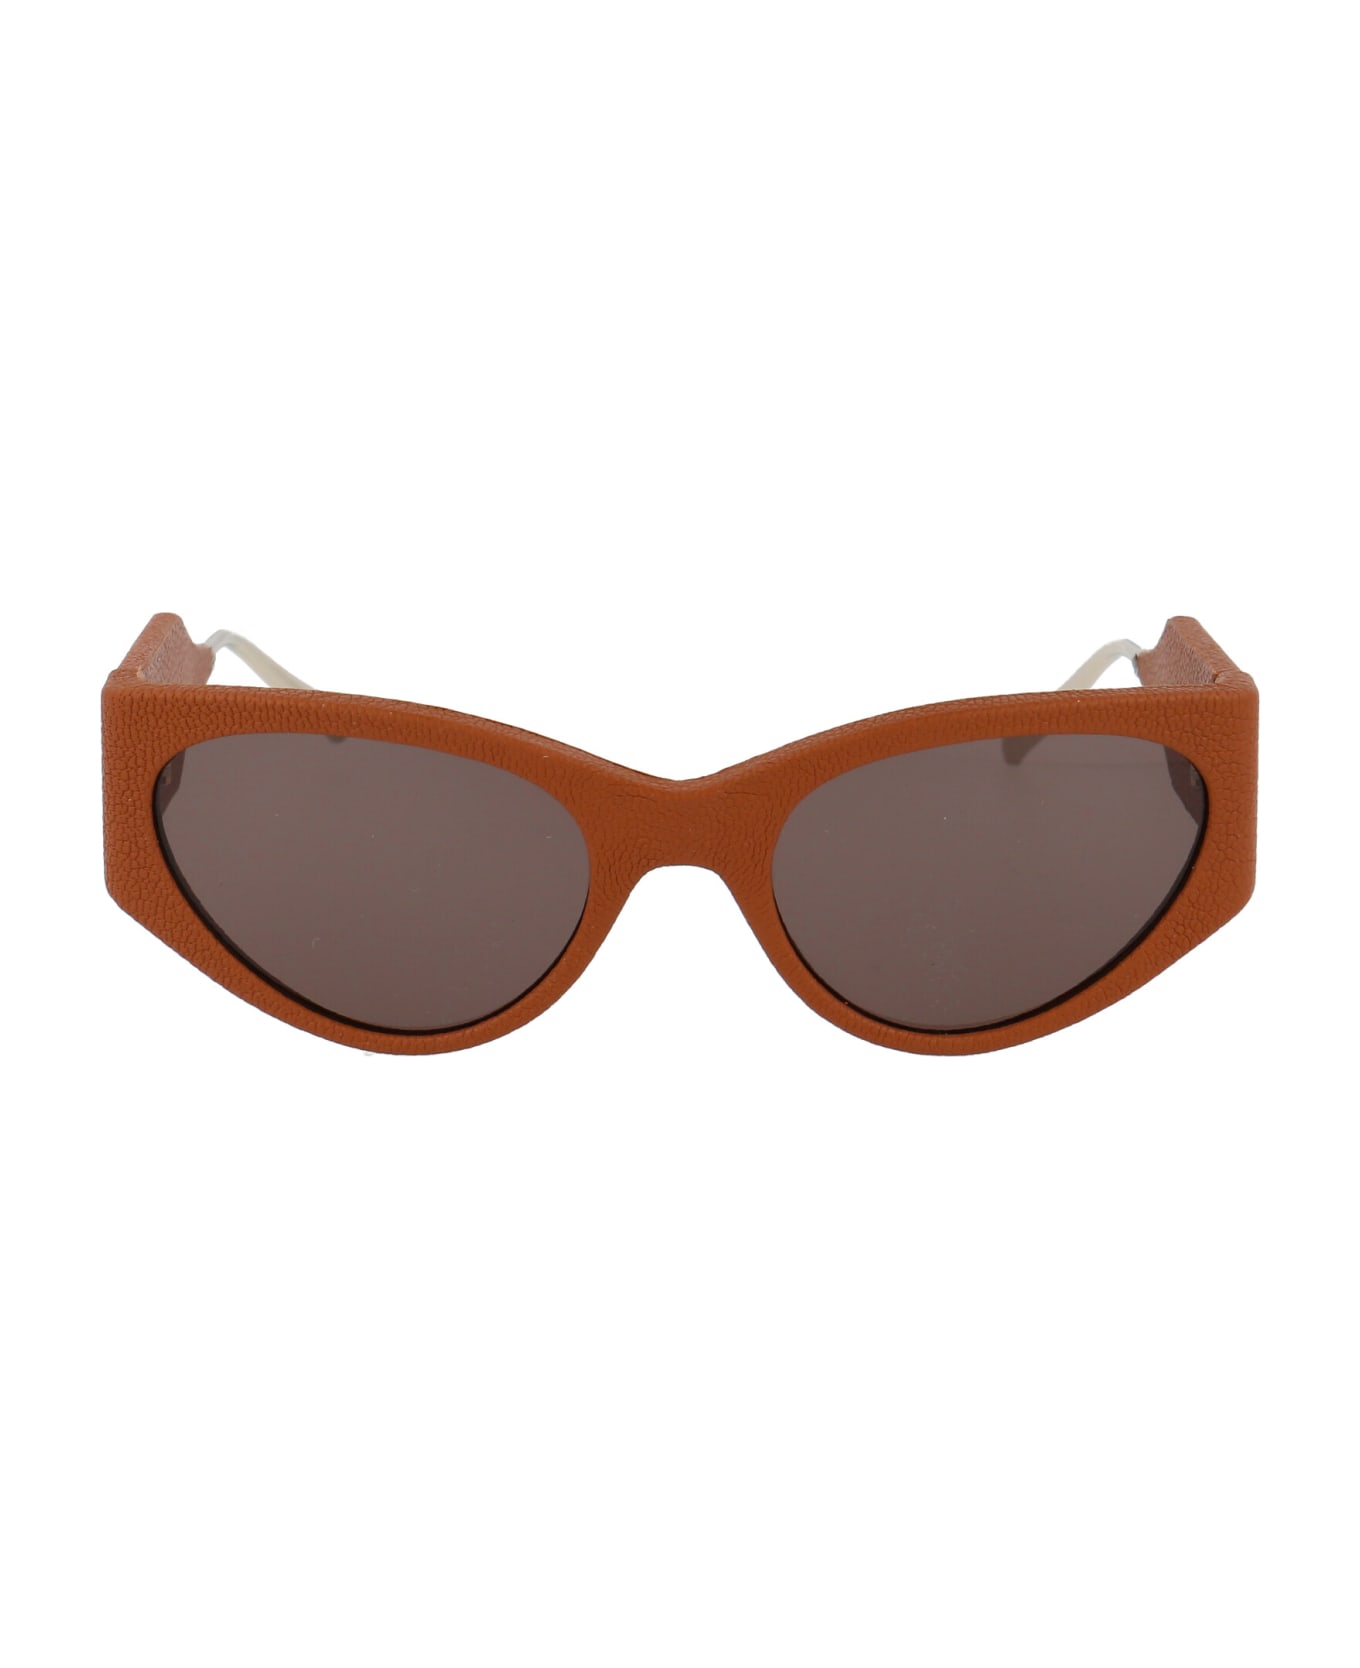 Salvatore Ferragamo Eyewear Sf950sl Sunglasses - 261 CARAMEL LEATHER サングラス